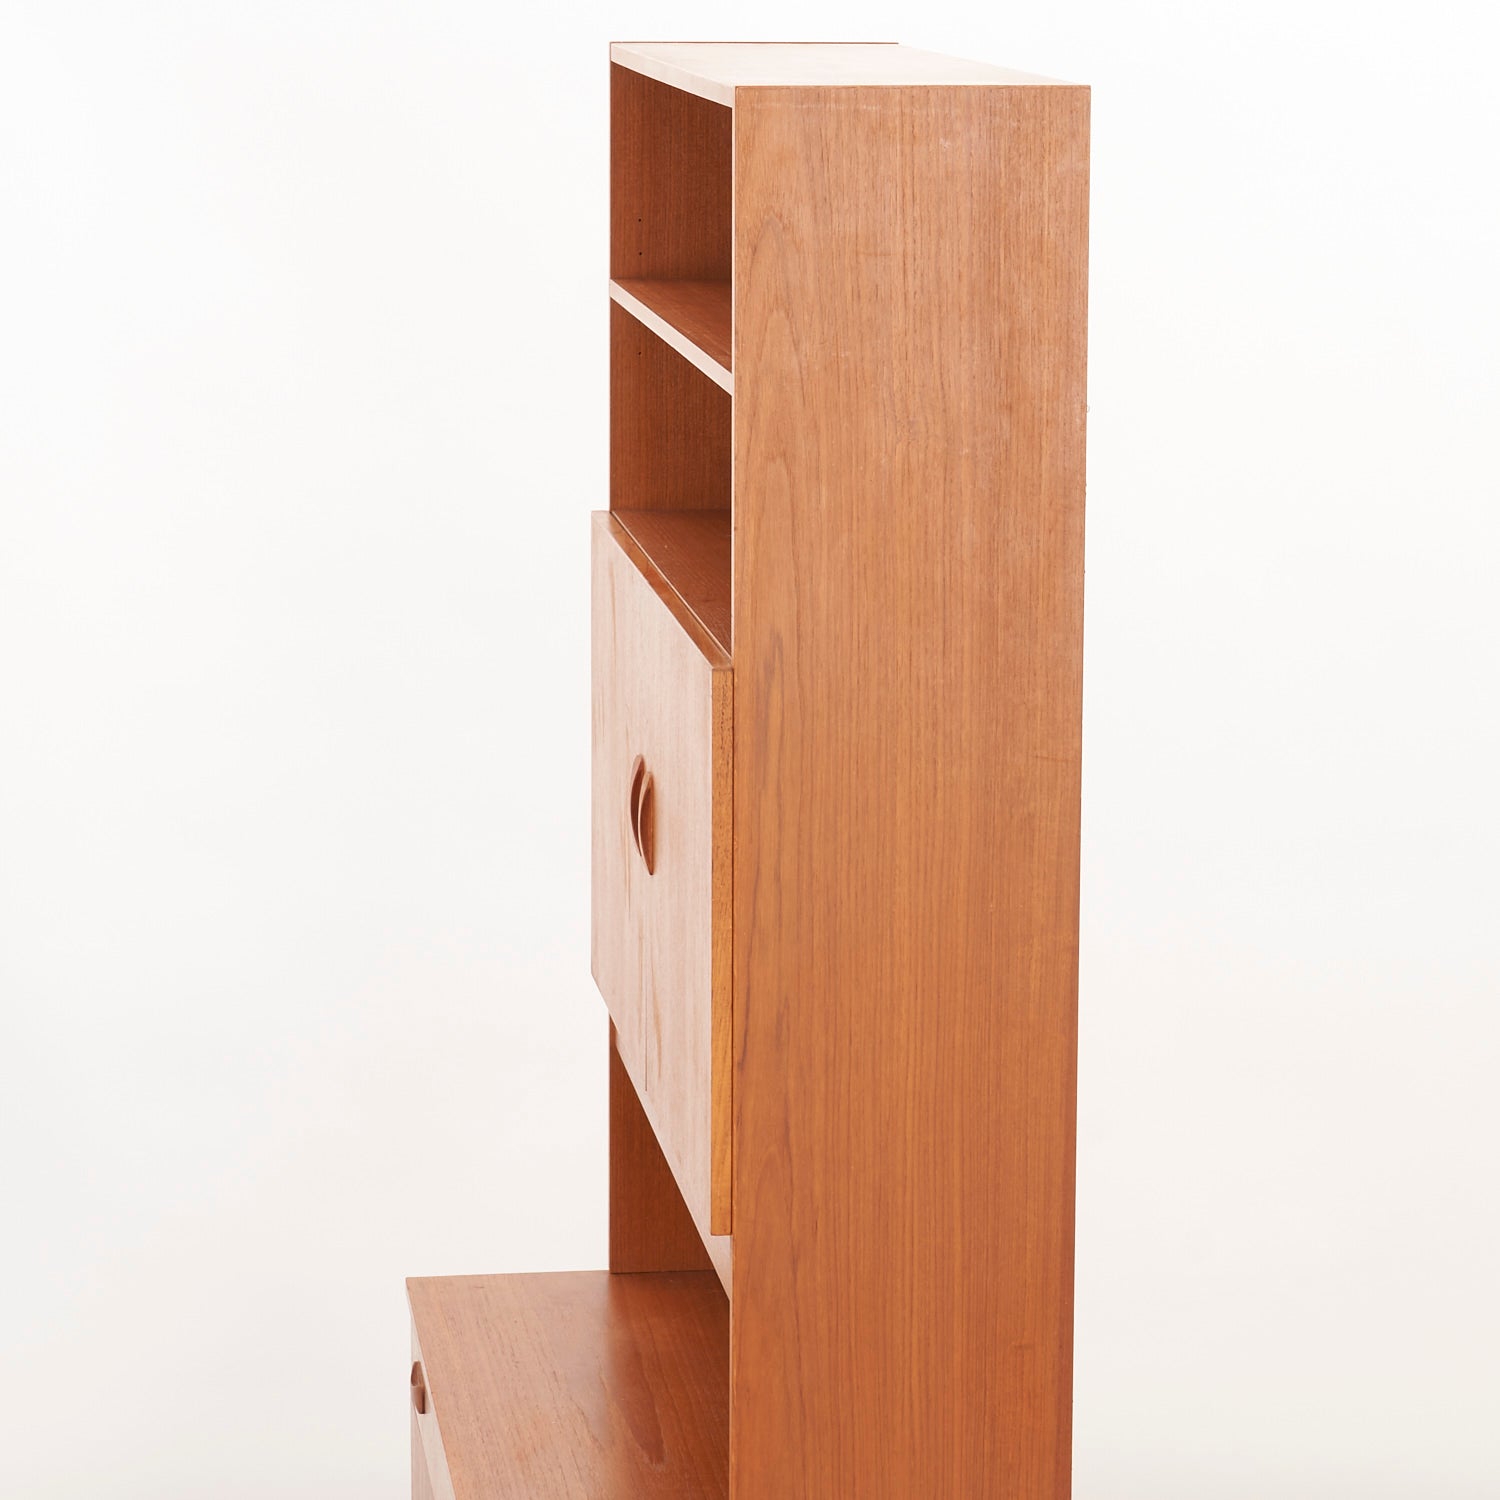 Teak Bookcase w/ Cabinet by Clausen & Son